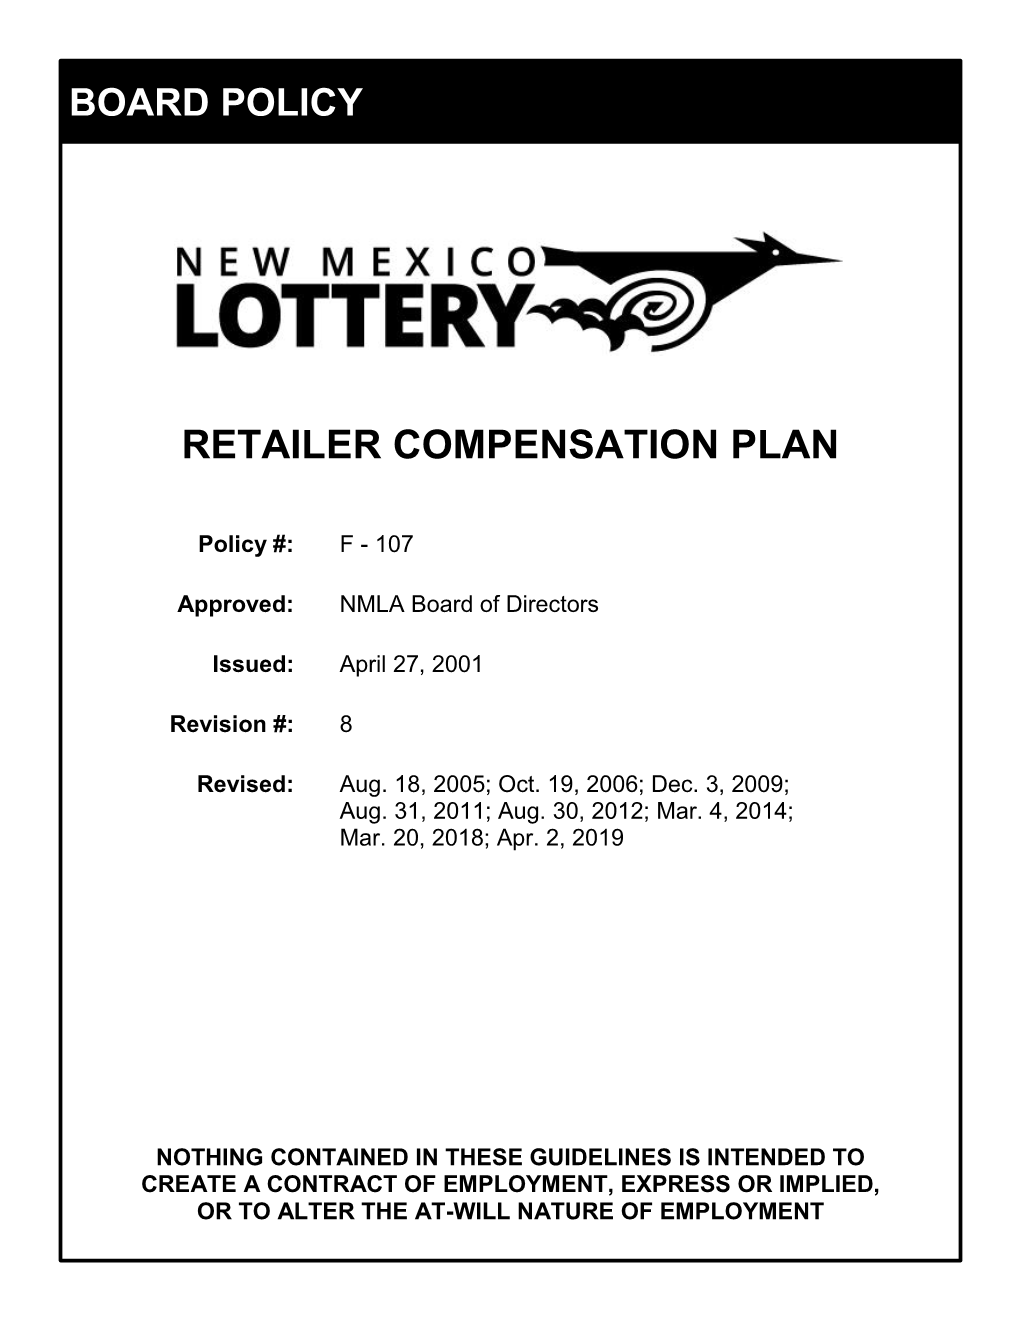 Retailer Compensation Plan